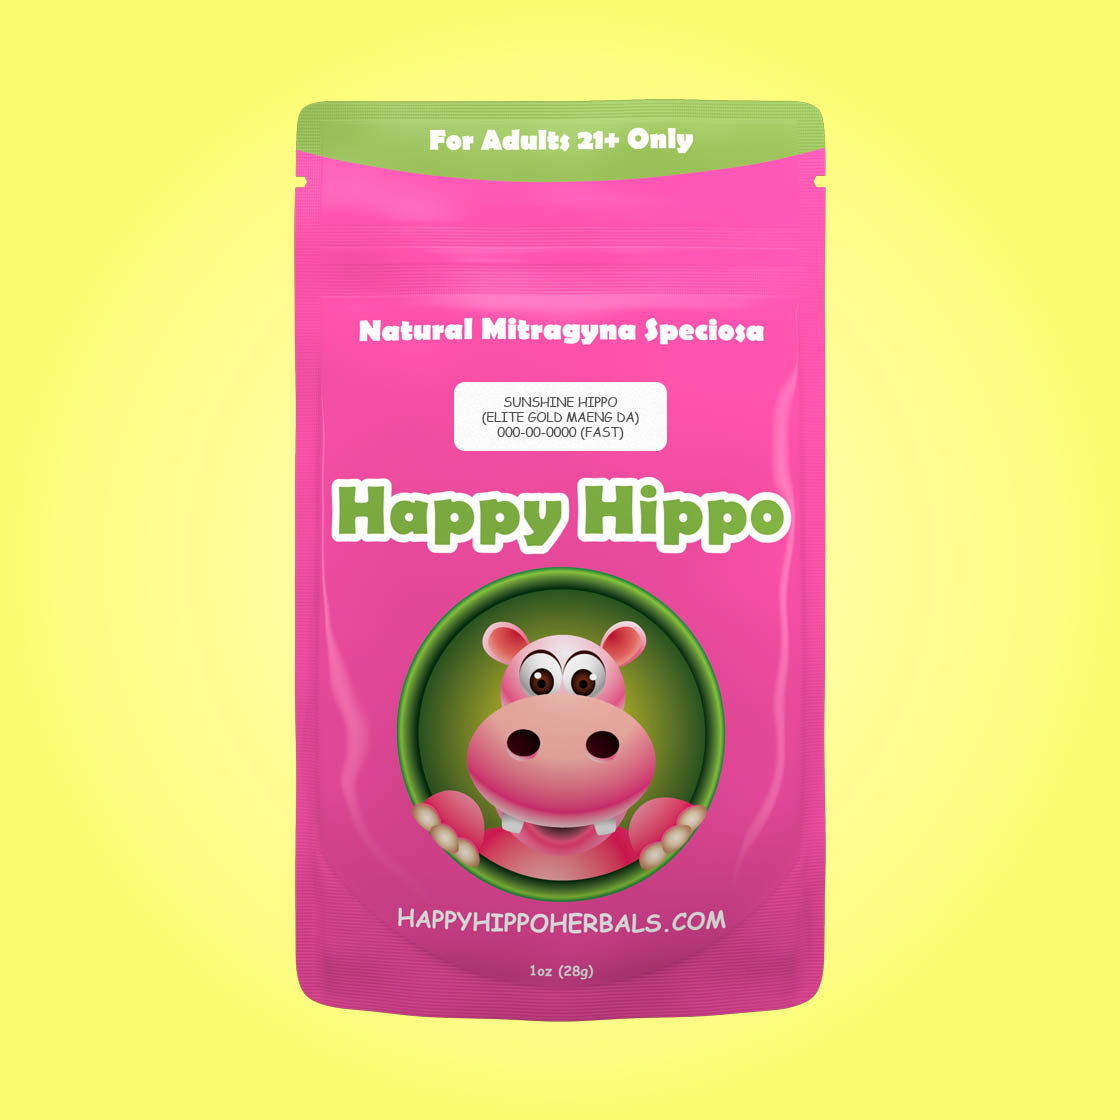 Product Image depicting a 1oz bag of Happy Hippo Yellow Vein Maeng Da Kratom Powder (Mitragyna Speciosa).